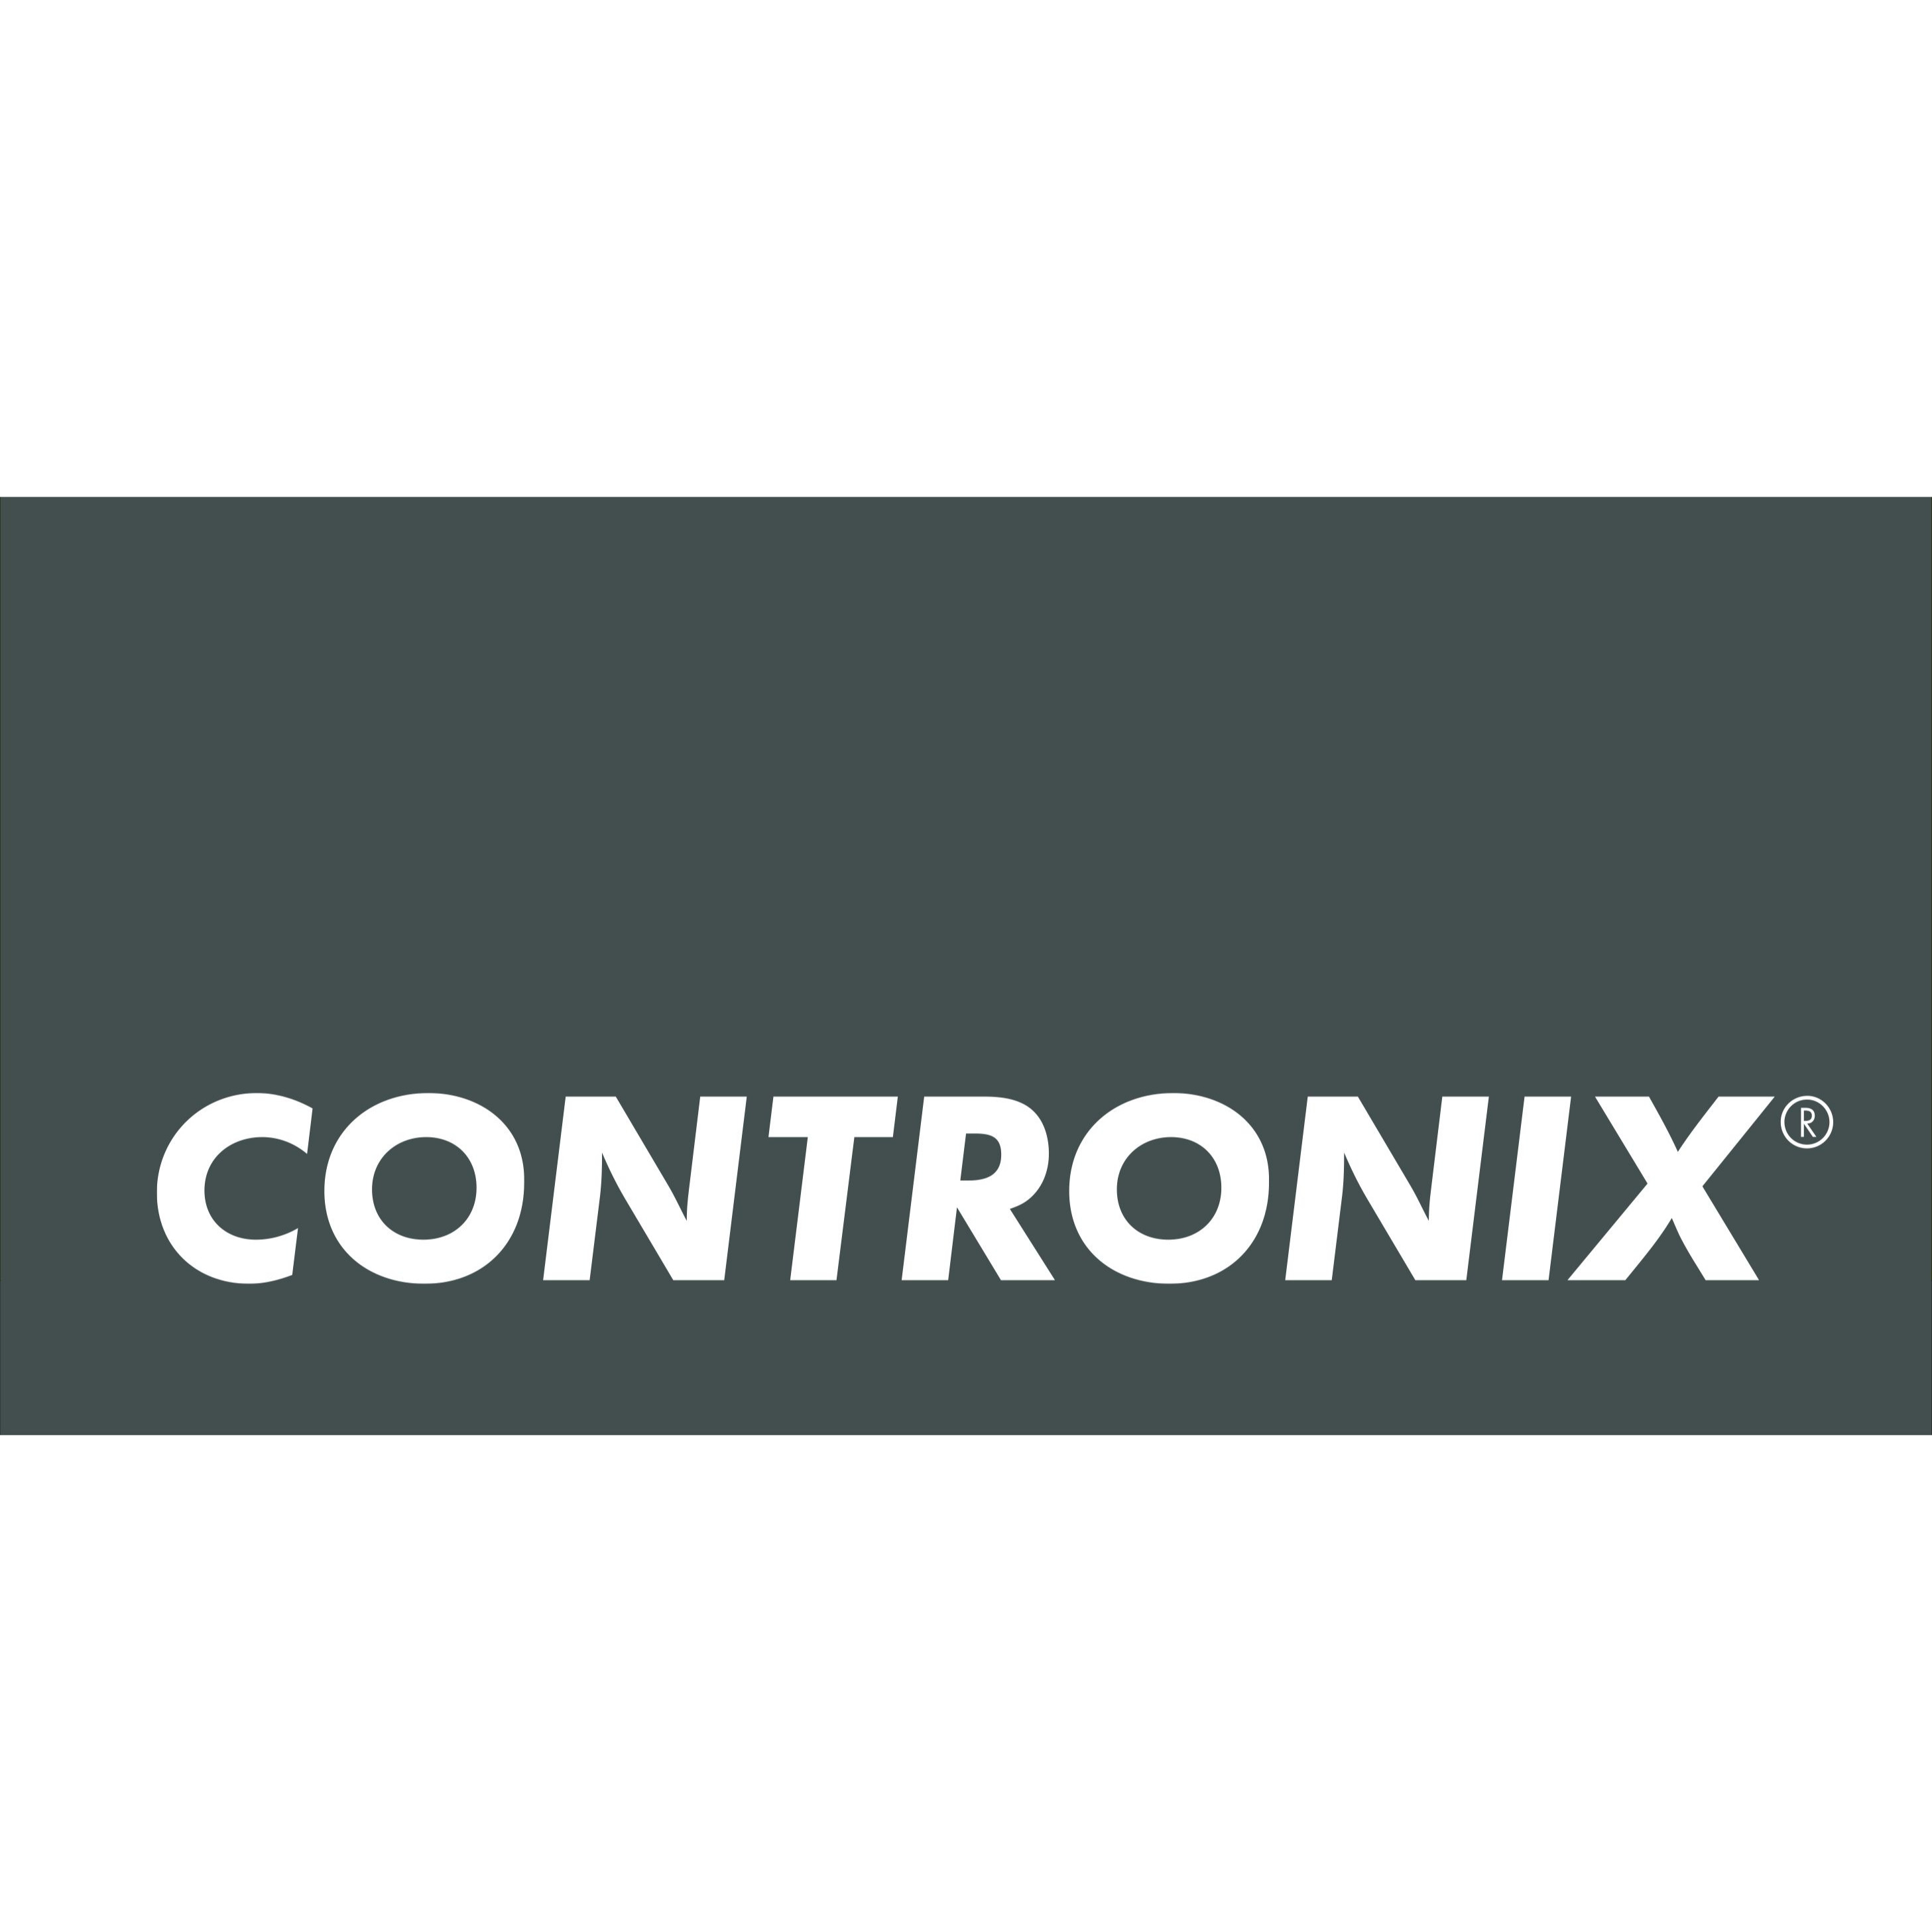 CONTRONIX Logo